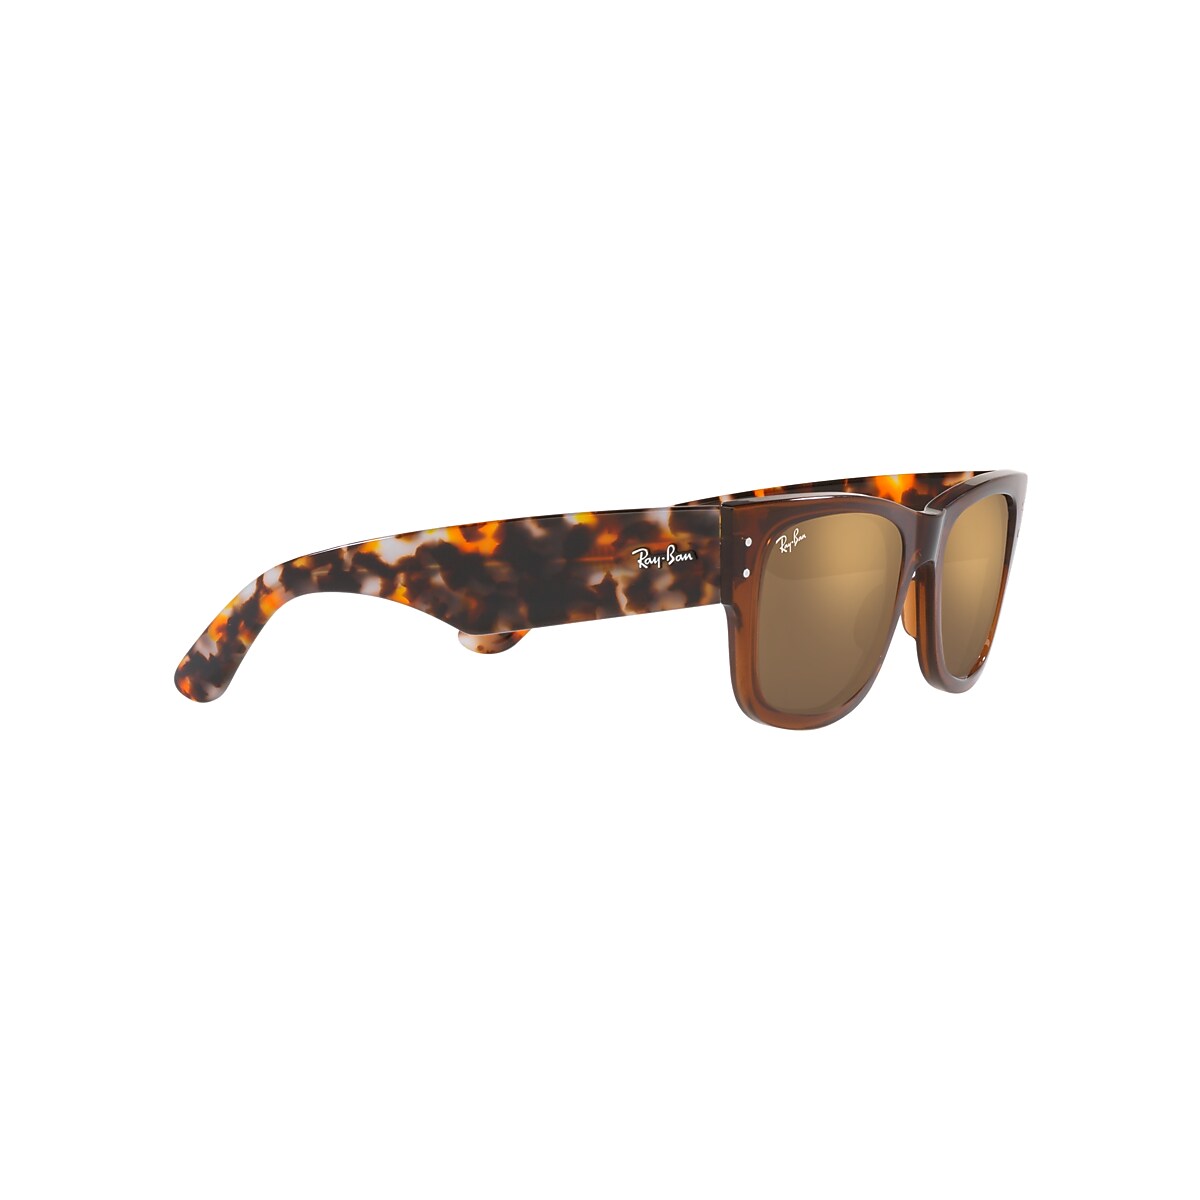 MEGA WAYFARER Sunglasses in Transparent Brown and Gold - RB0840S 